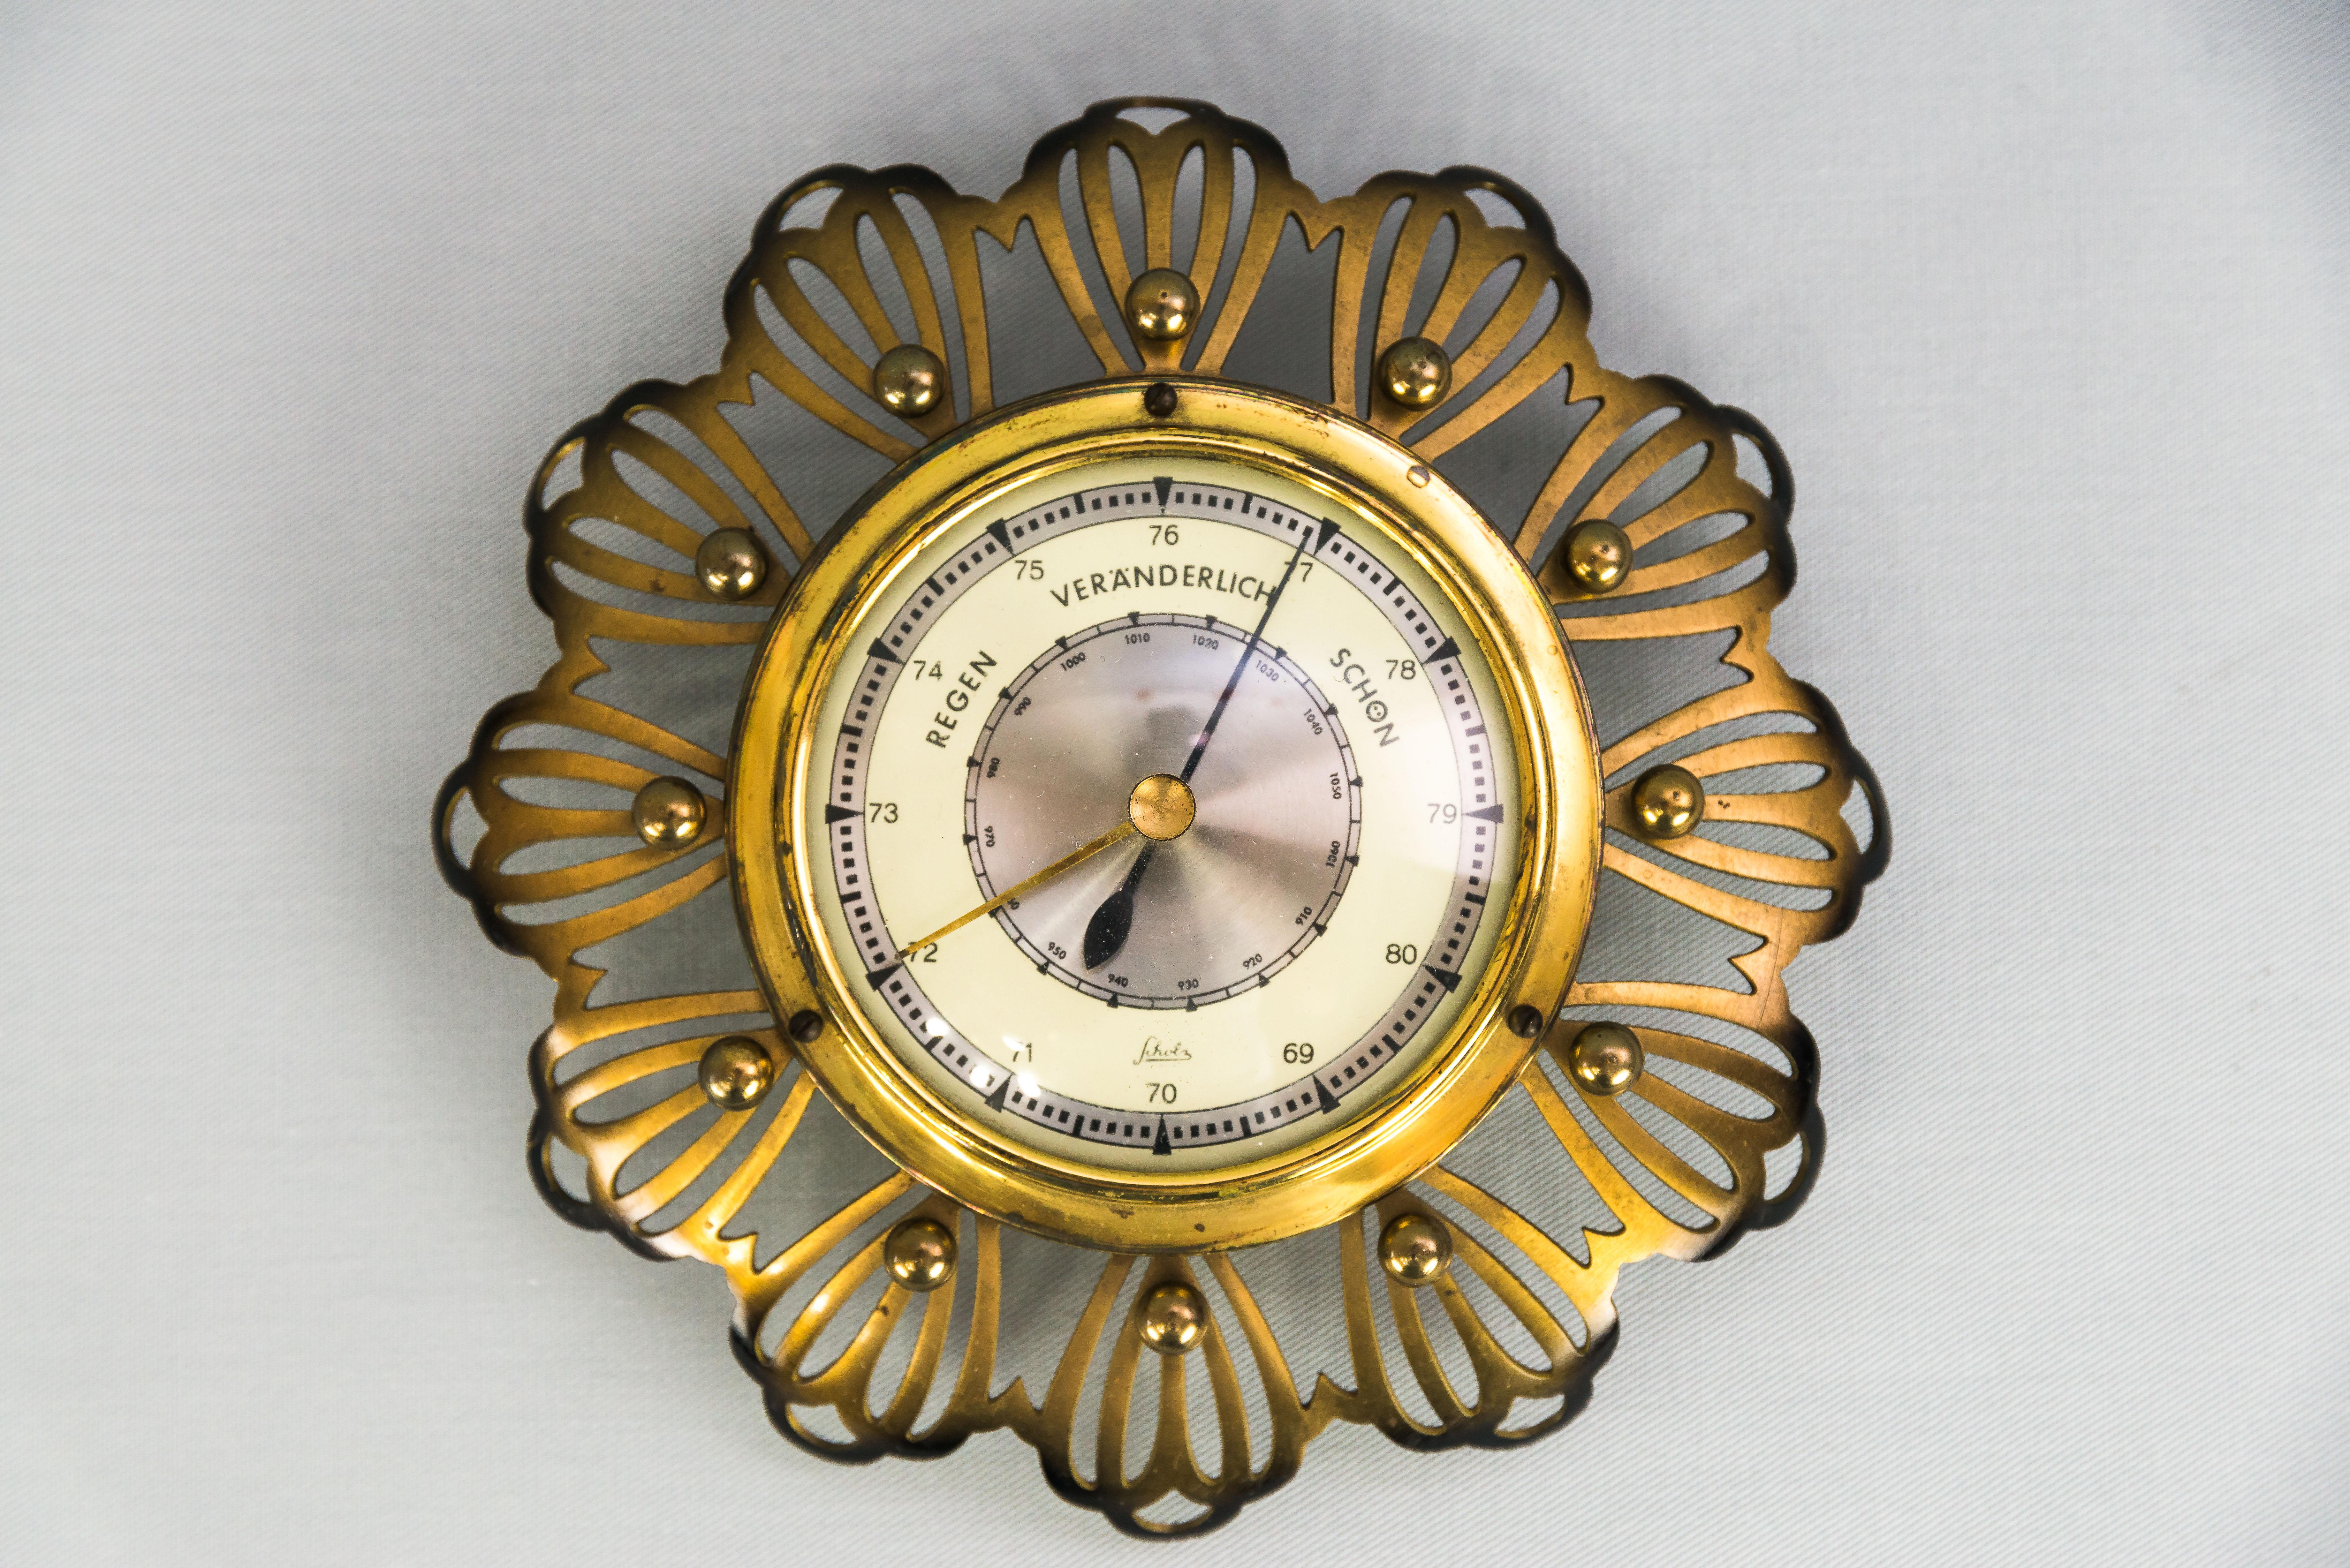 Barometer around 1960s
Original condition